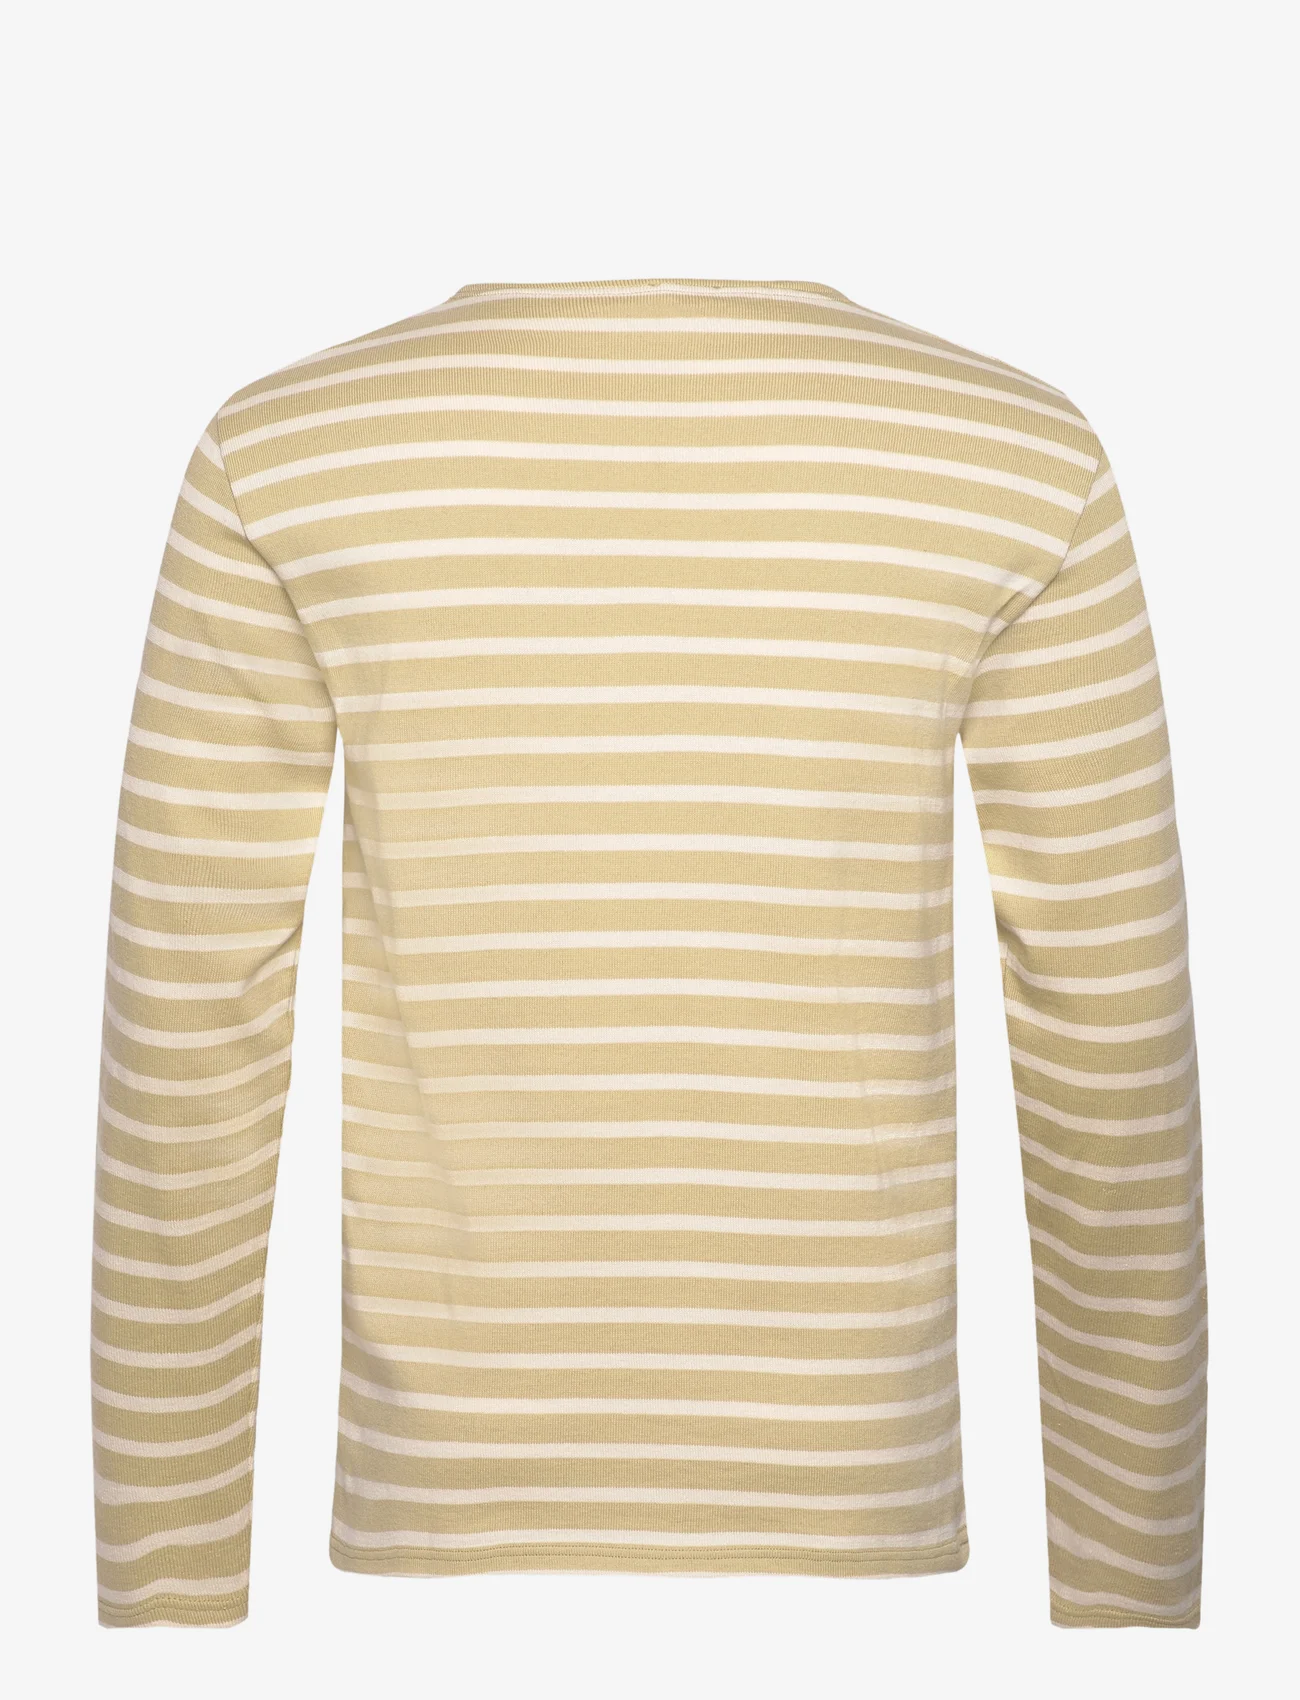 Armor Lux - Striped Breton Shirt Héritage - długi rękaw - pale olive/nature - 1